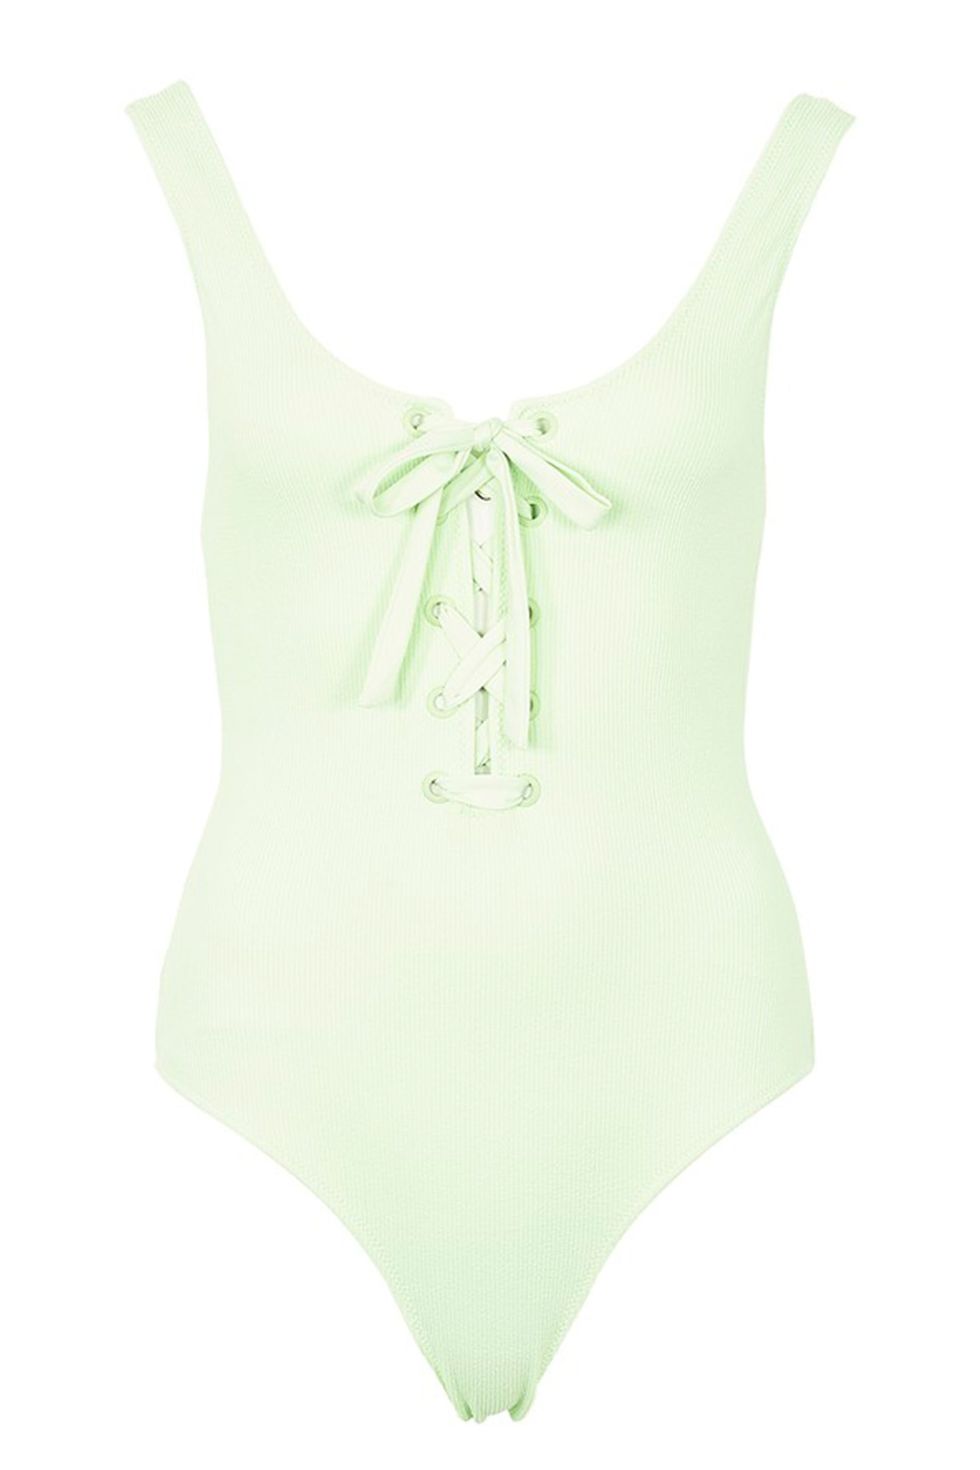 Summersalt swimsuit ad features postpartum mom breastfeeding son